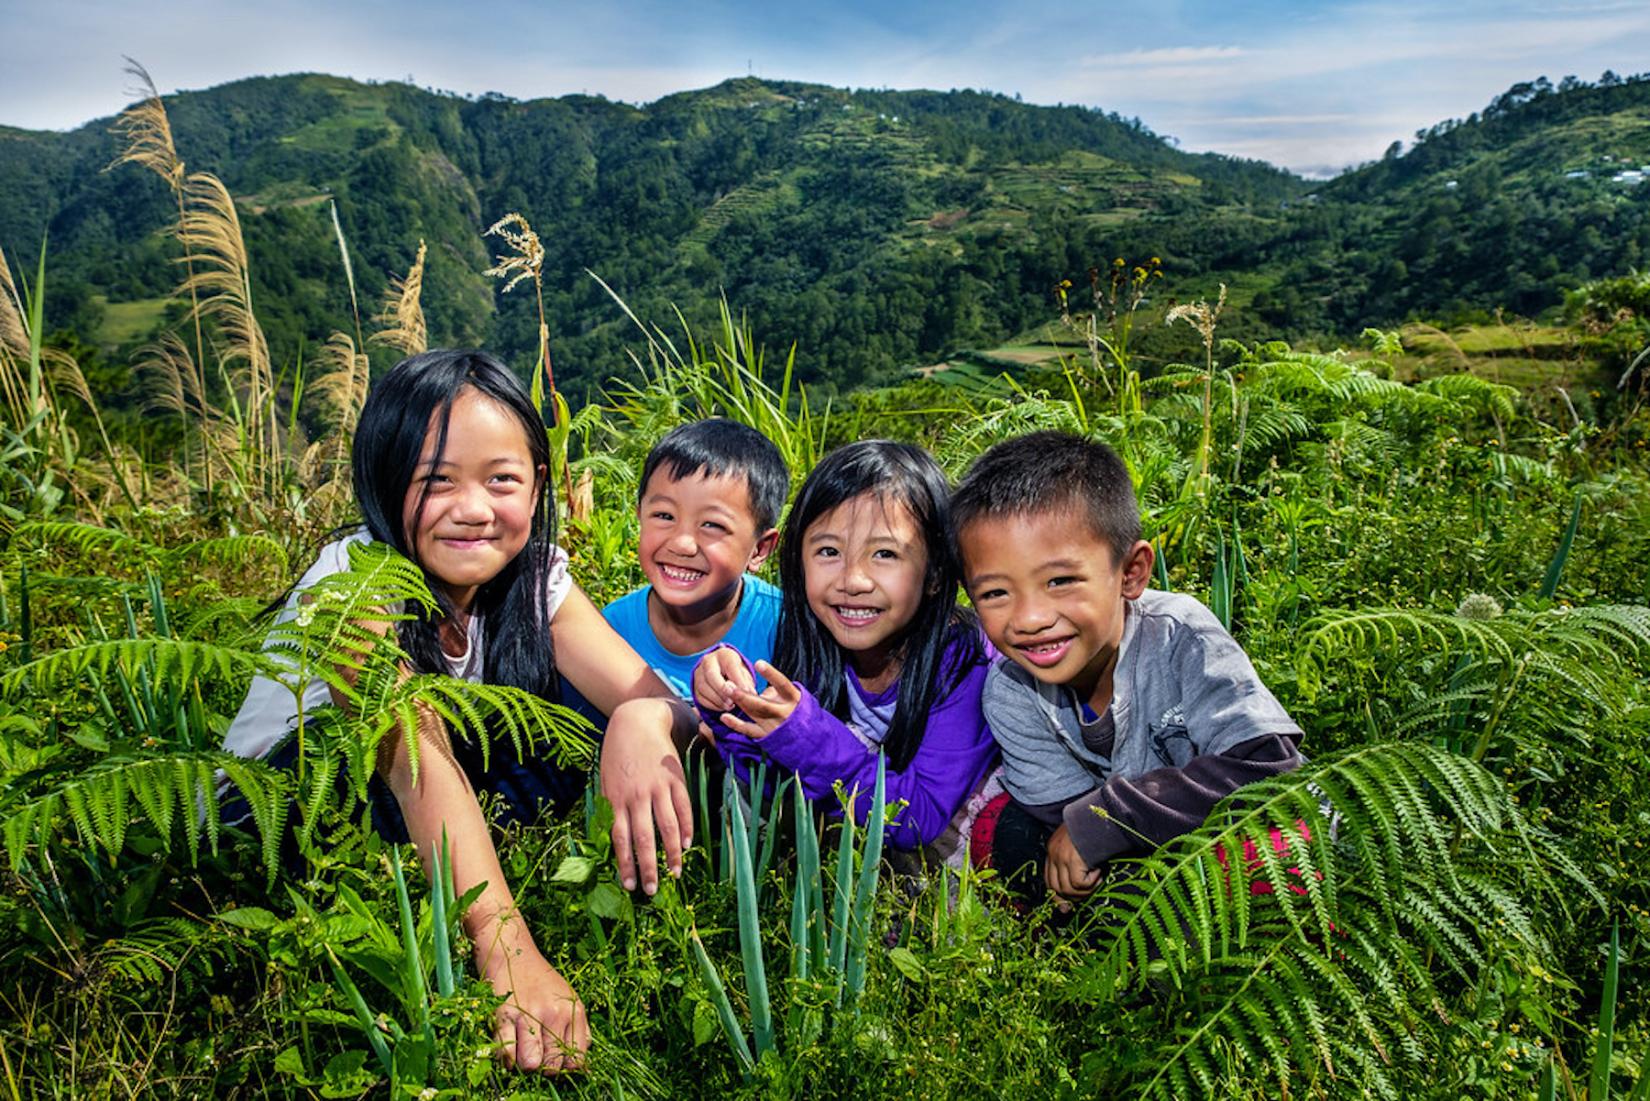 Children in Benguet Province, Philippines